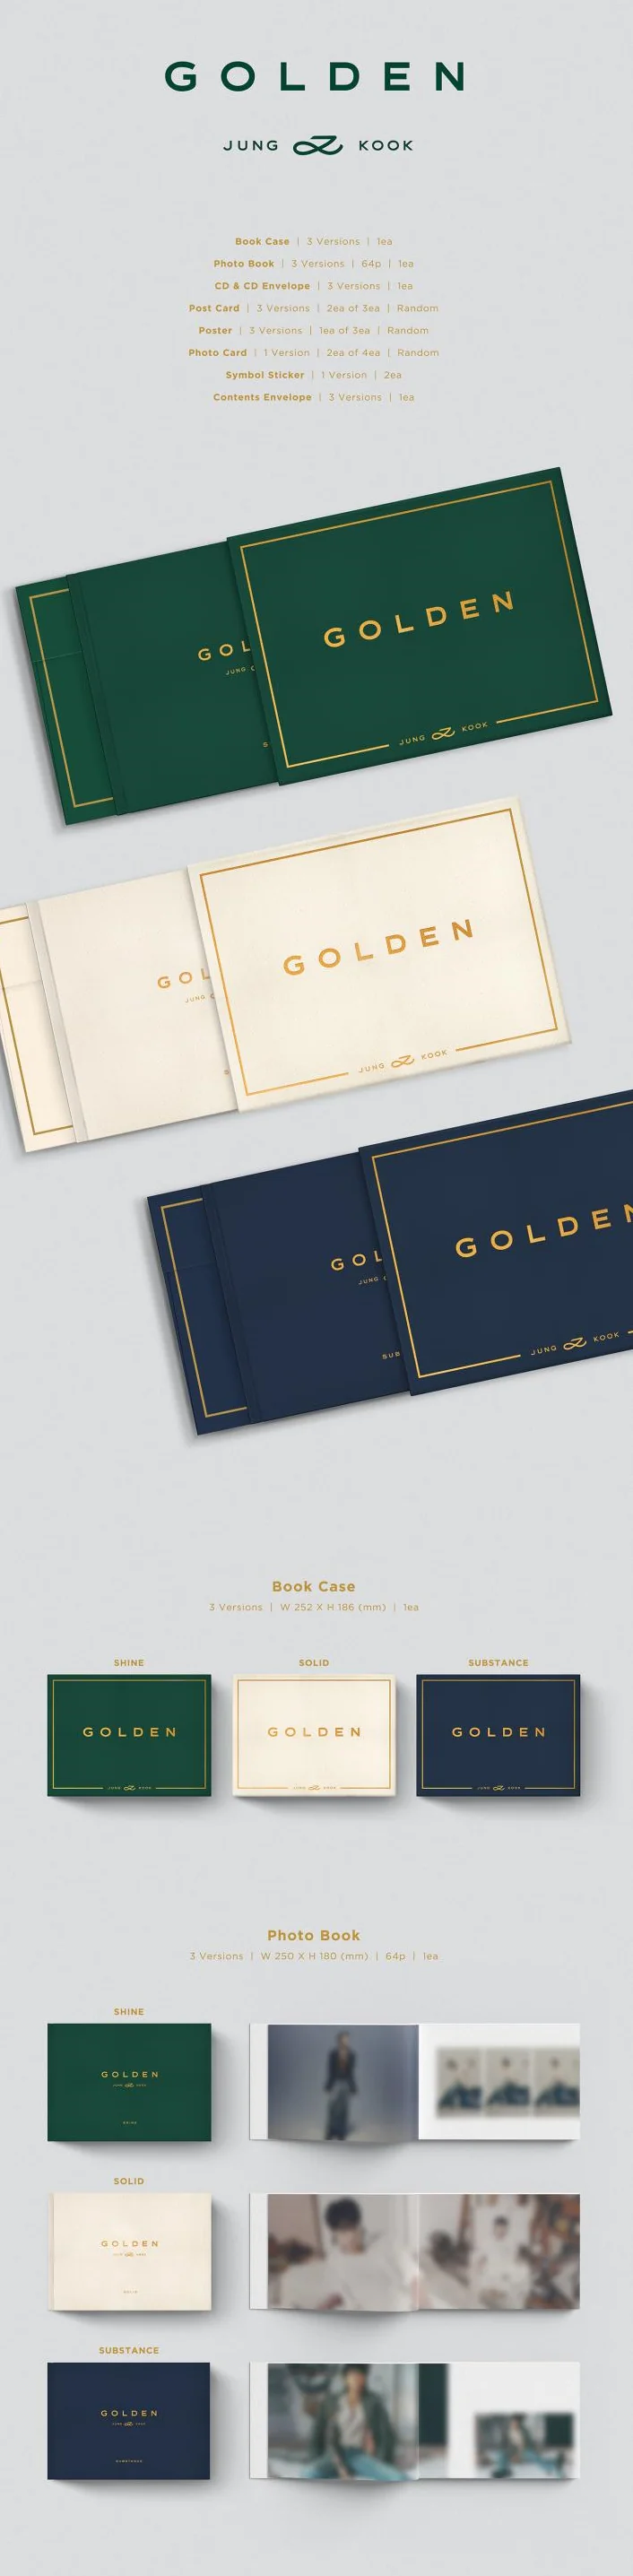 Jungkook Solo Album 'Golden